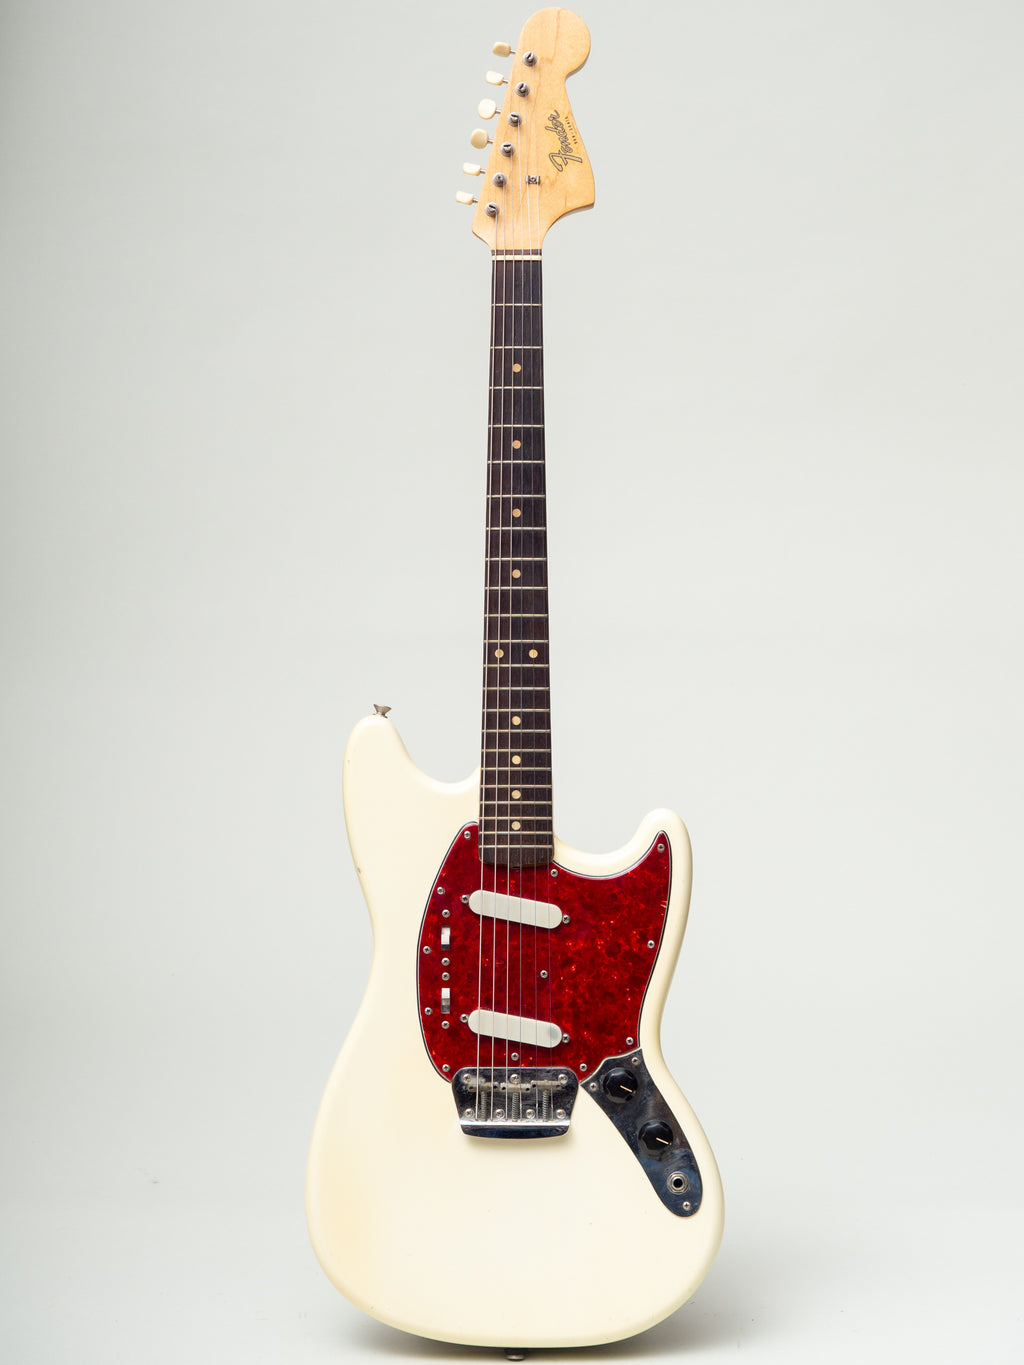 1964 Fender Duo-Sonic